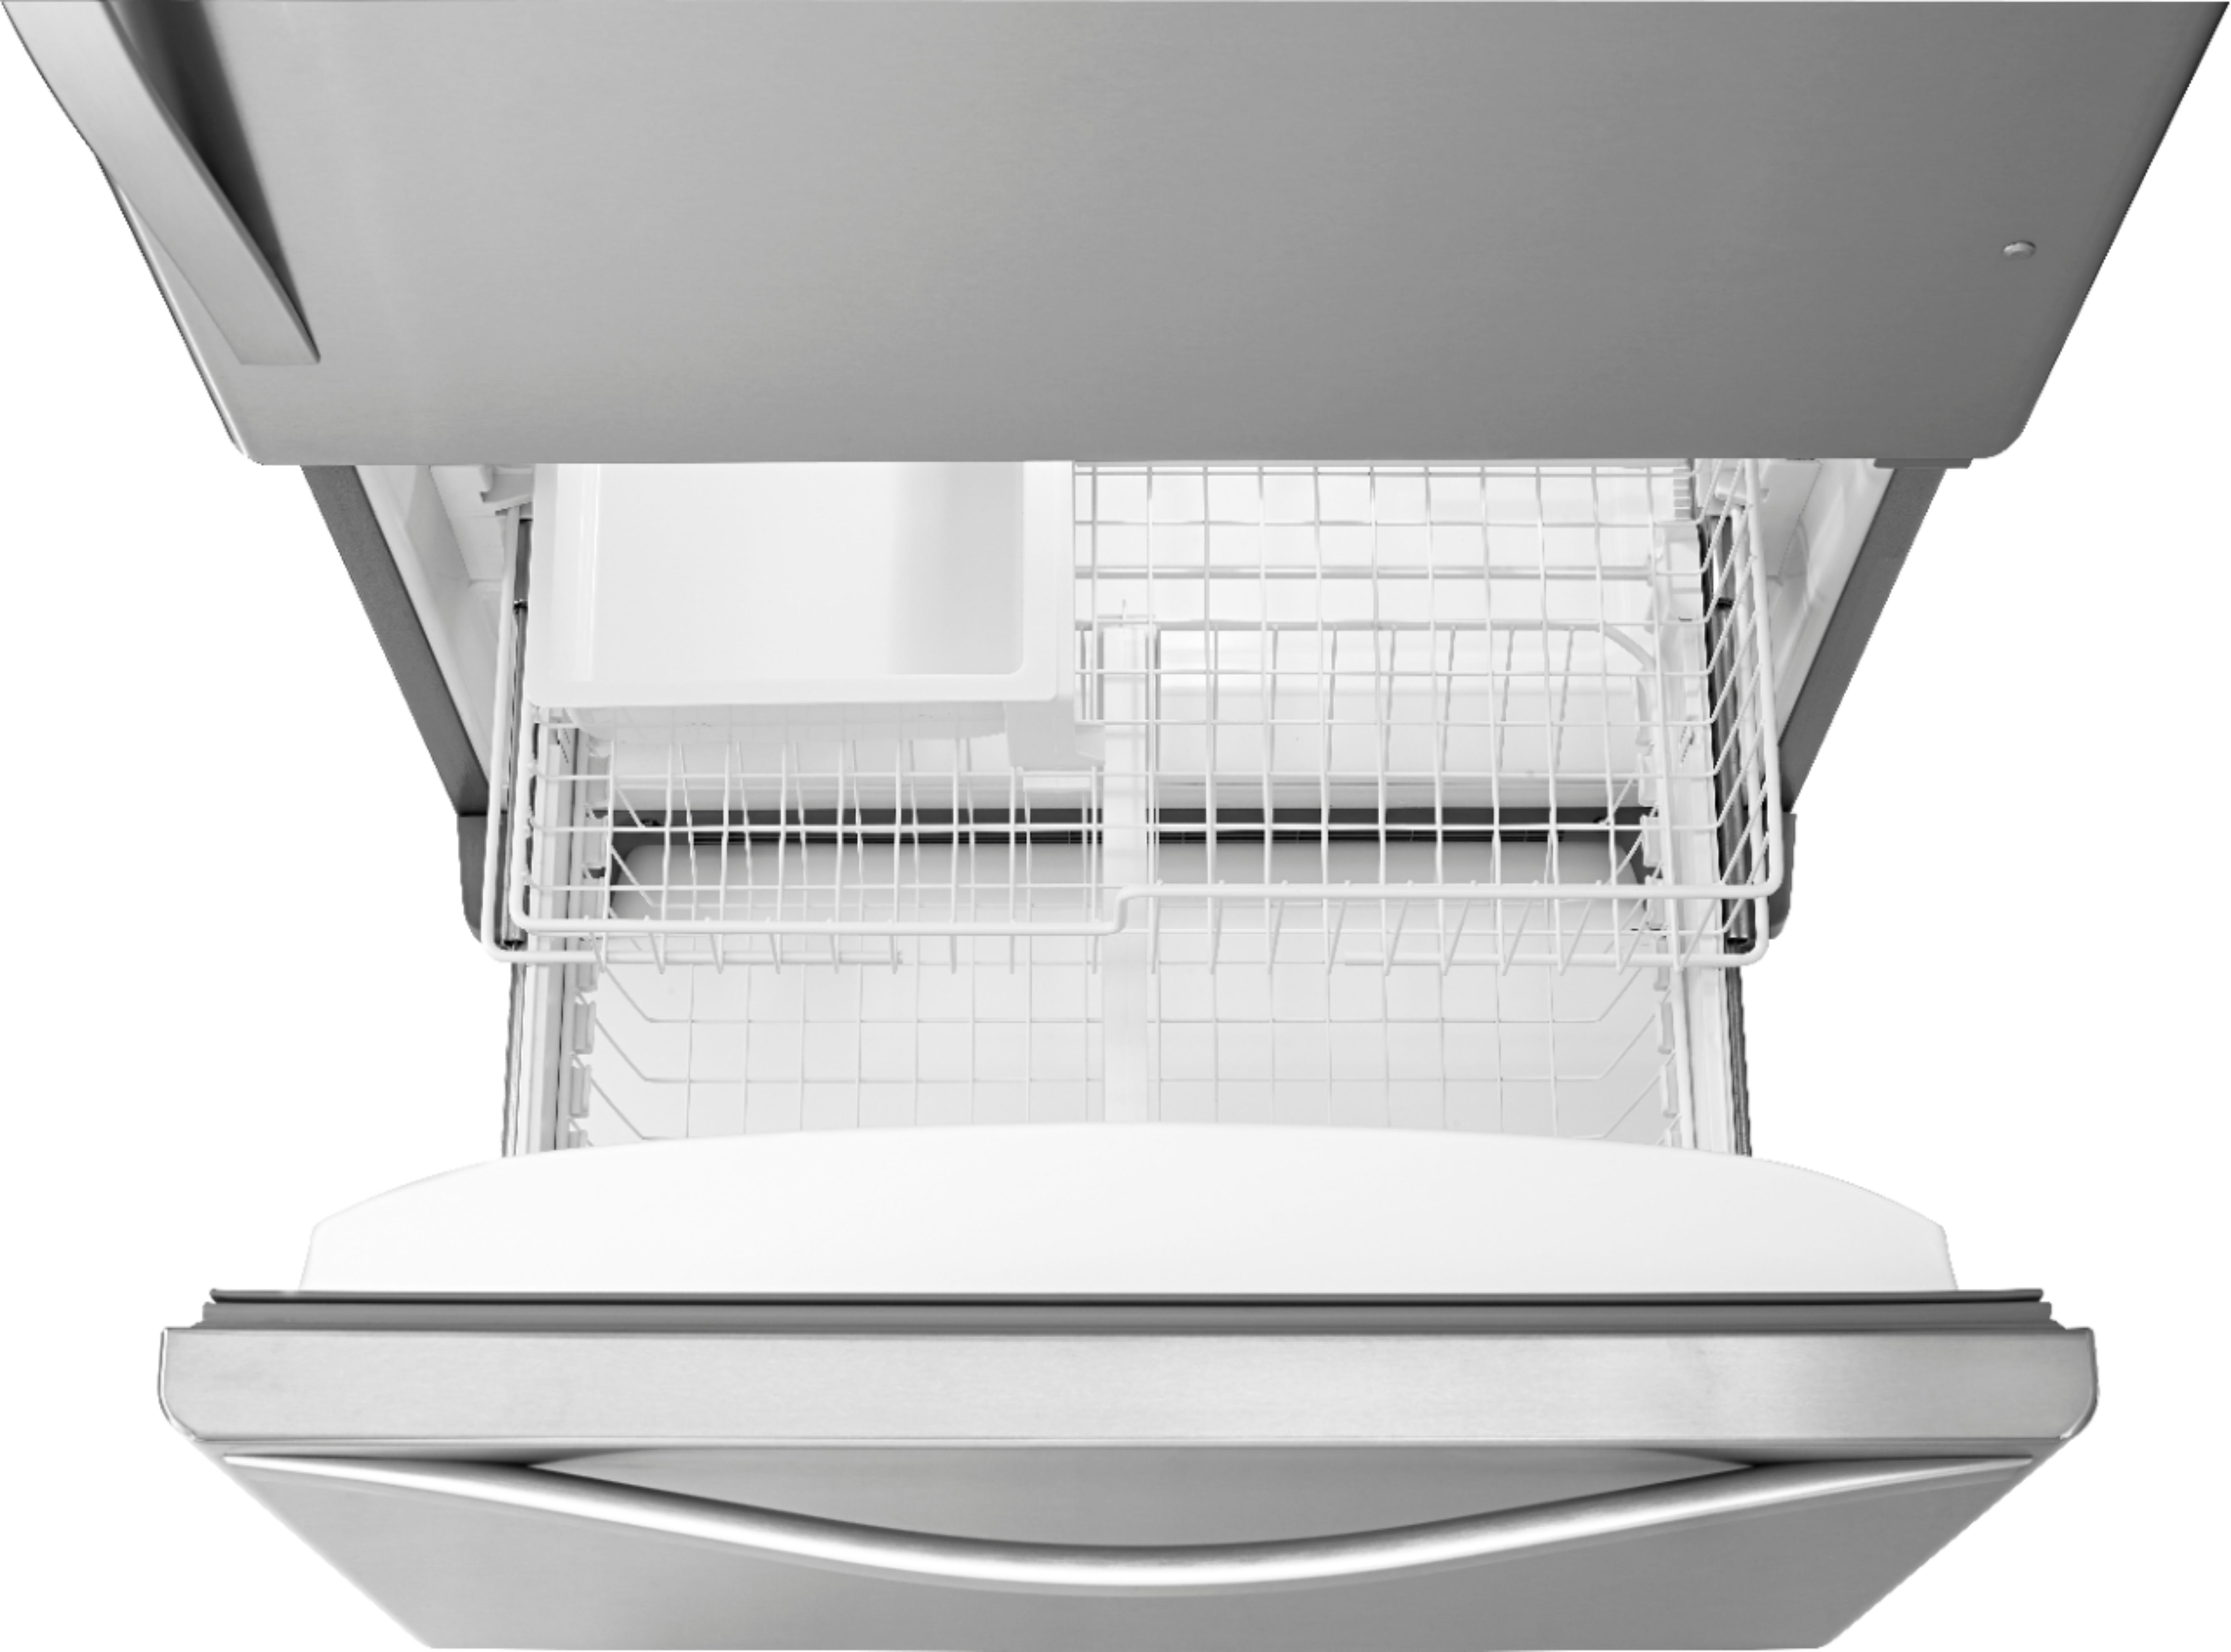 VÄLGRUNDAD Bottom-freezer refrigerator, Stainless steel, 19 cu.ft